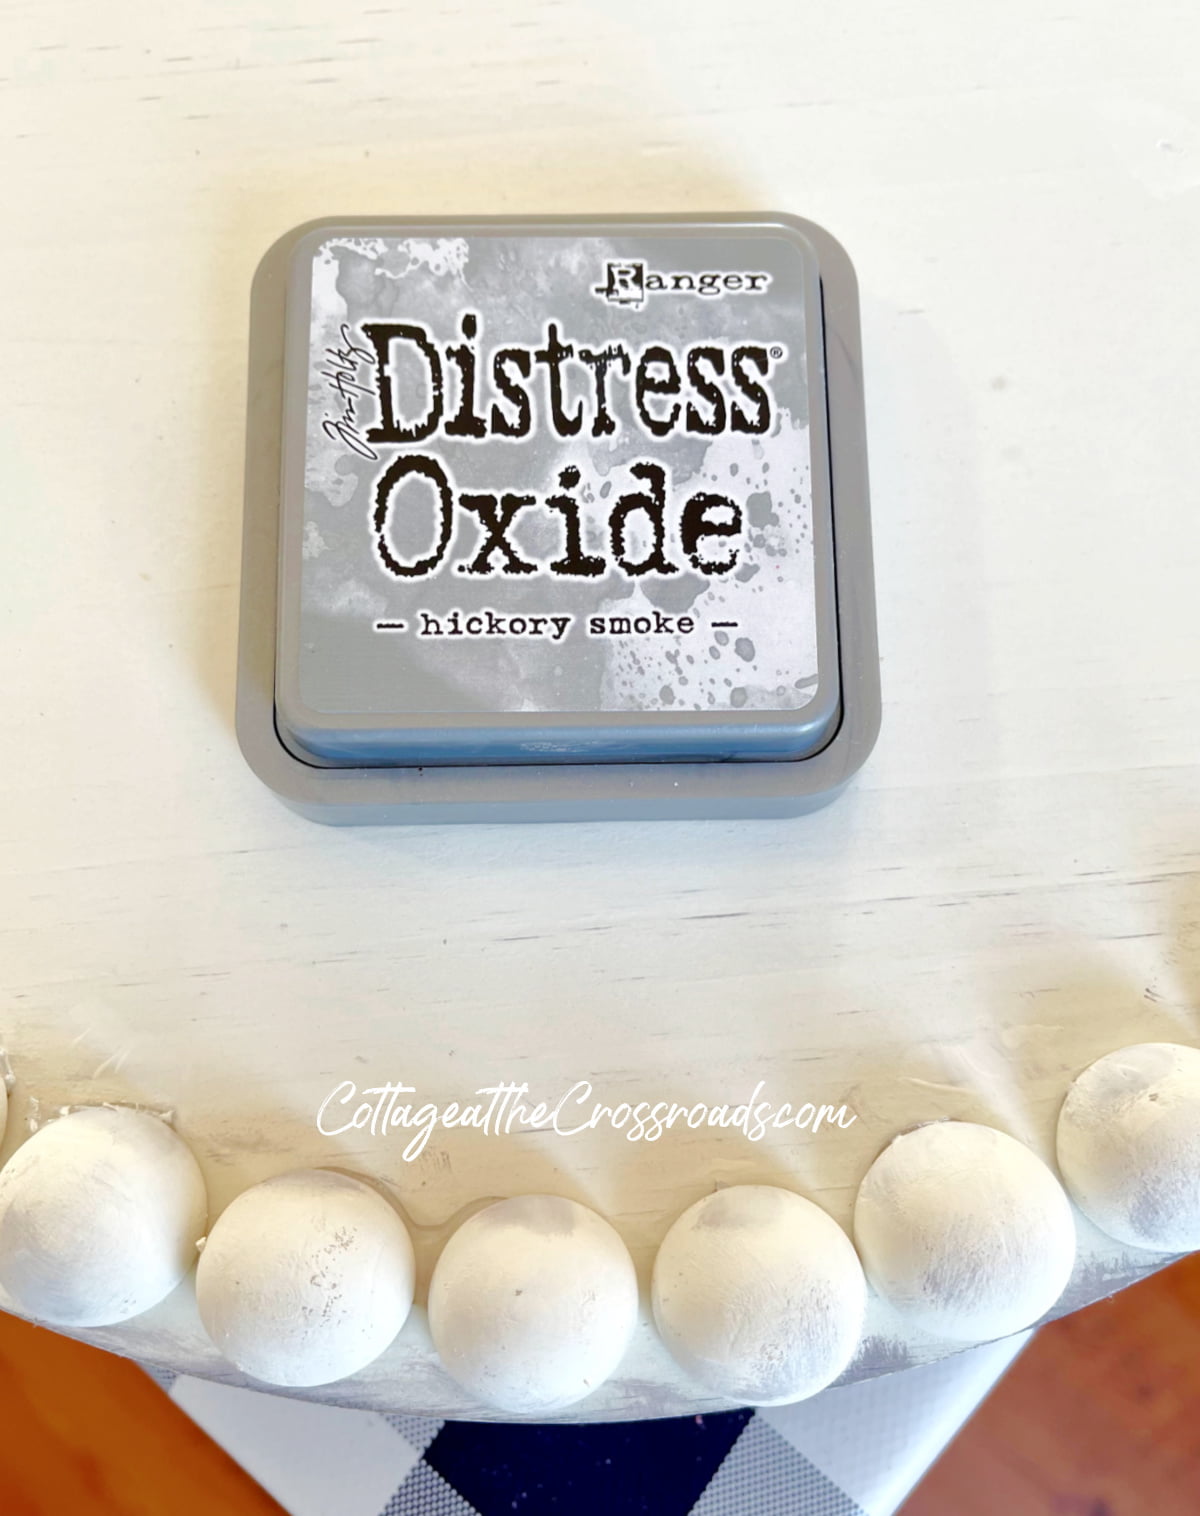 Distress oxide